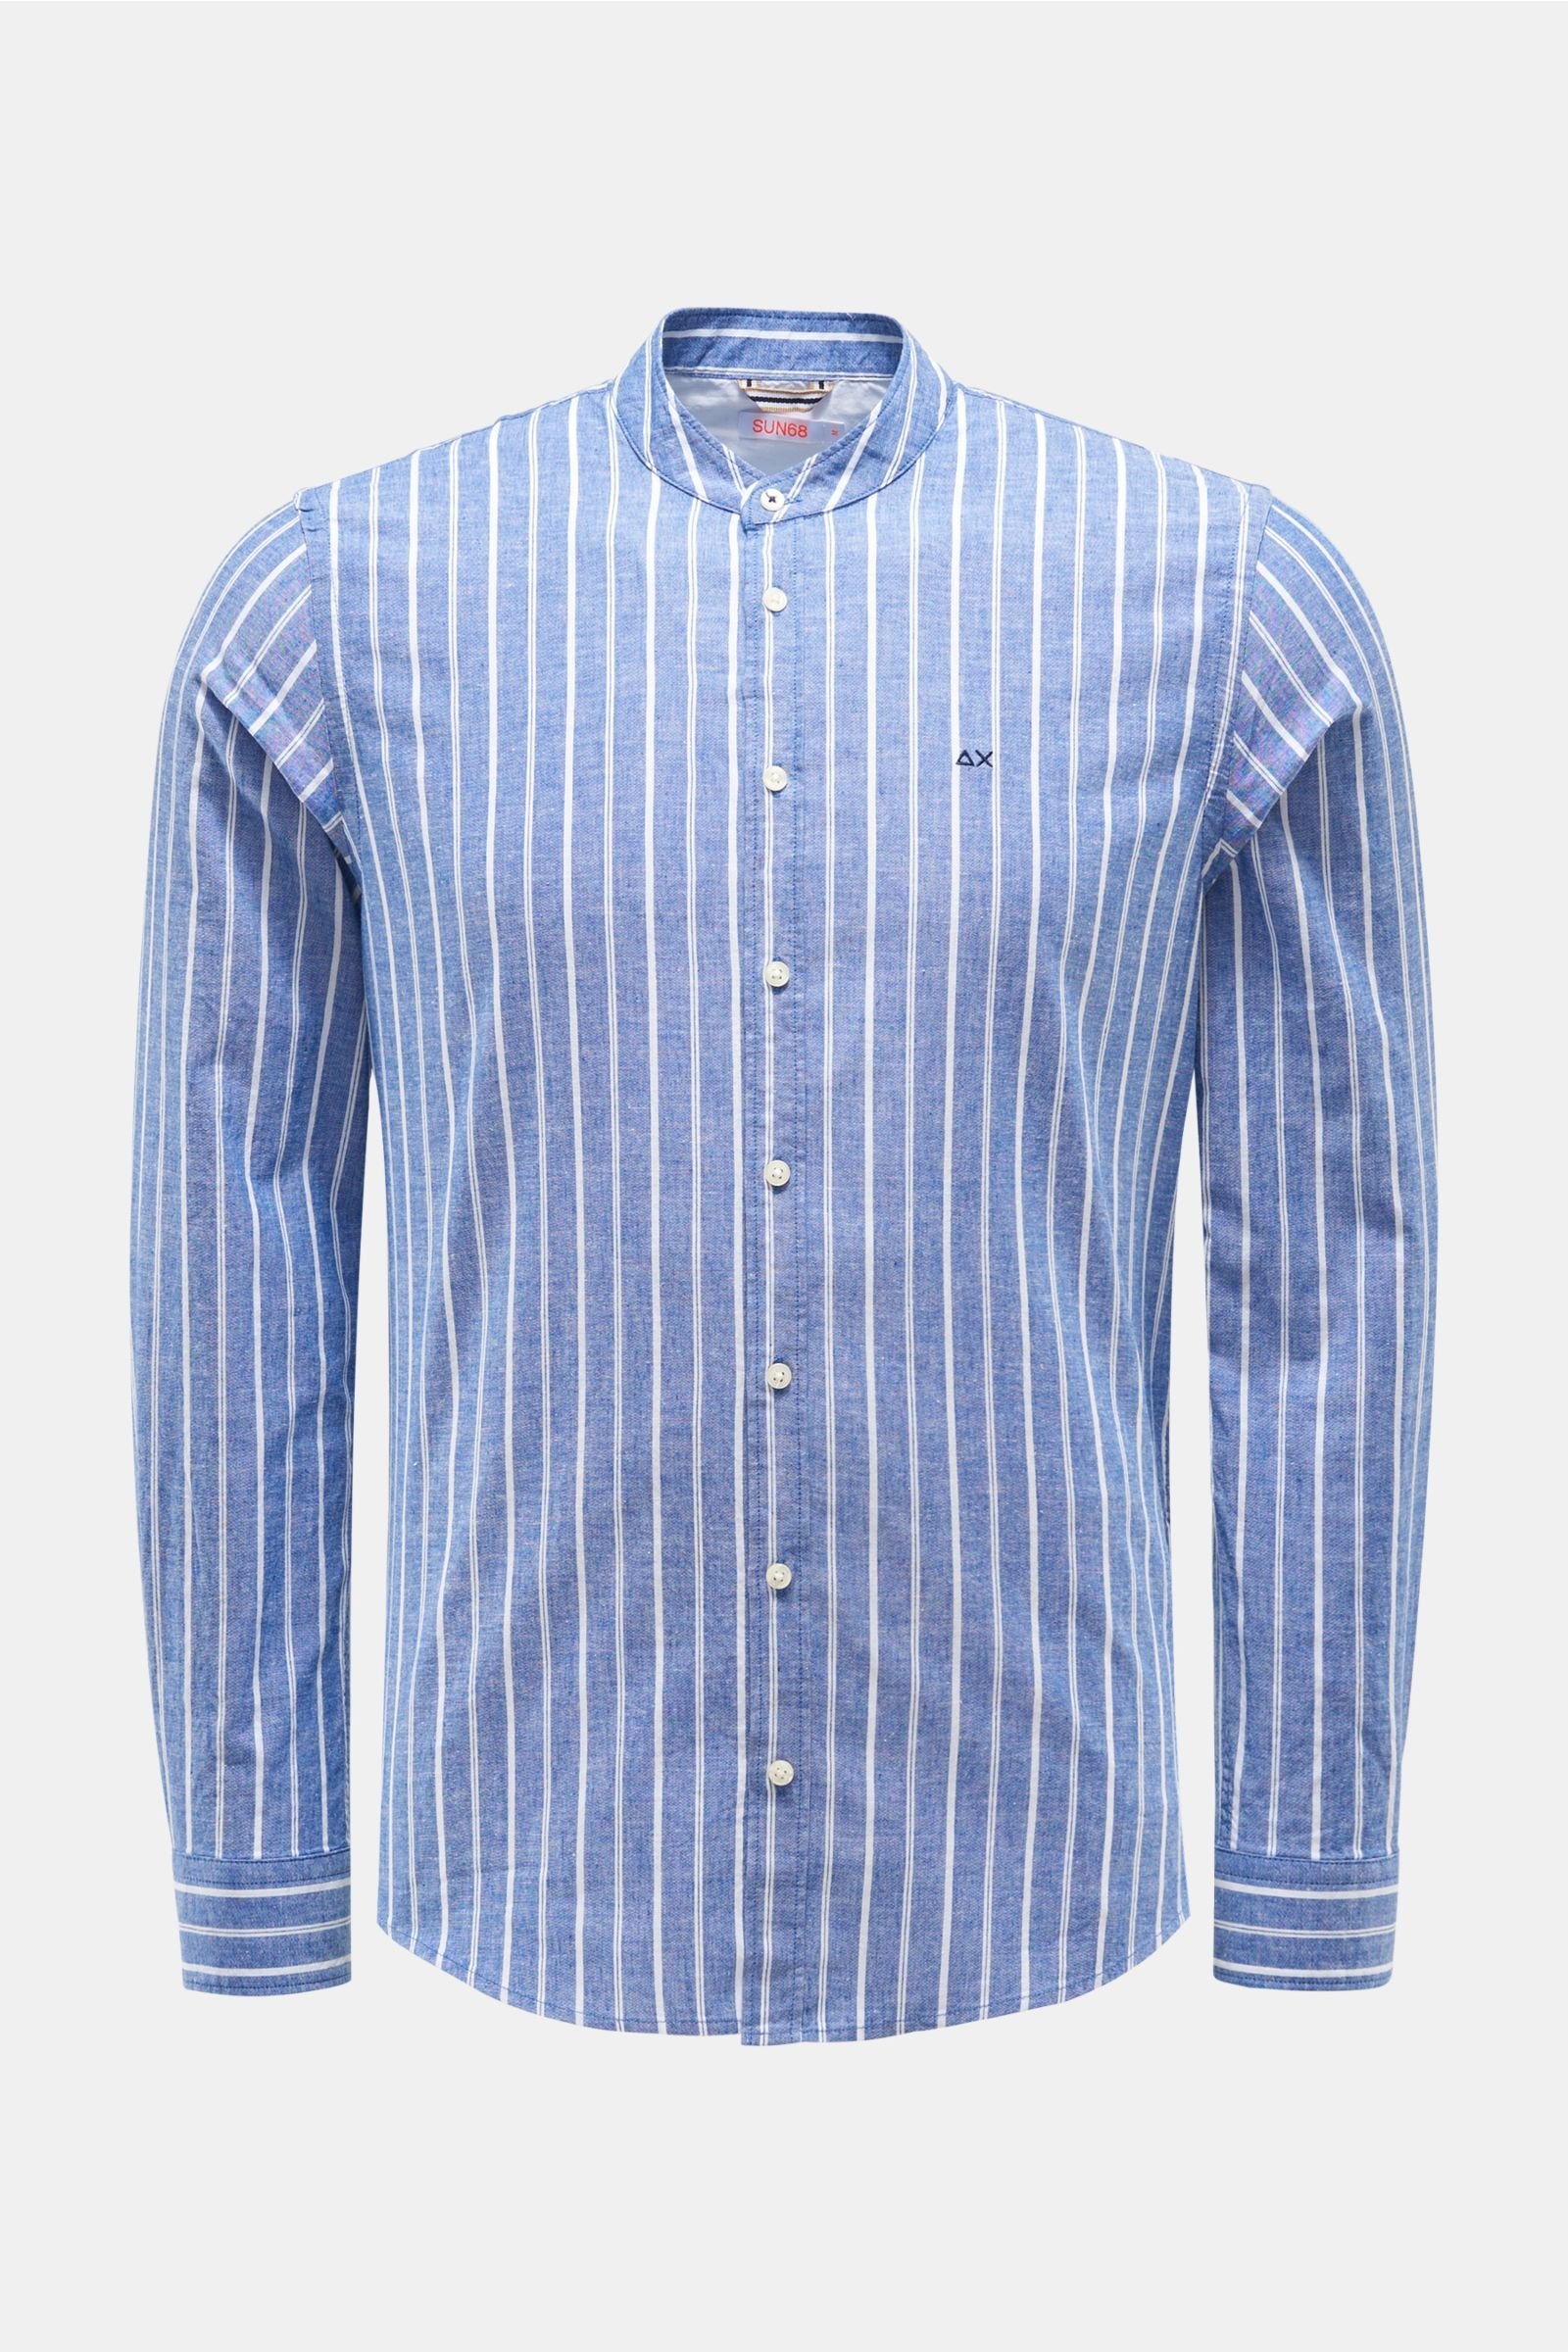 Casual shirt grandad collar grey-blue/white striped